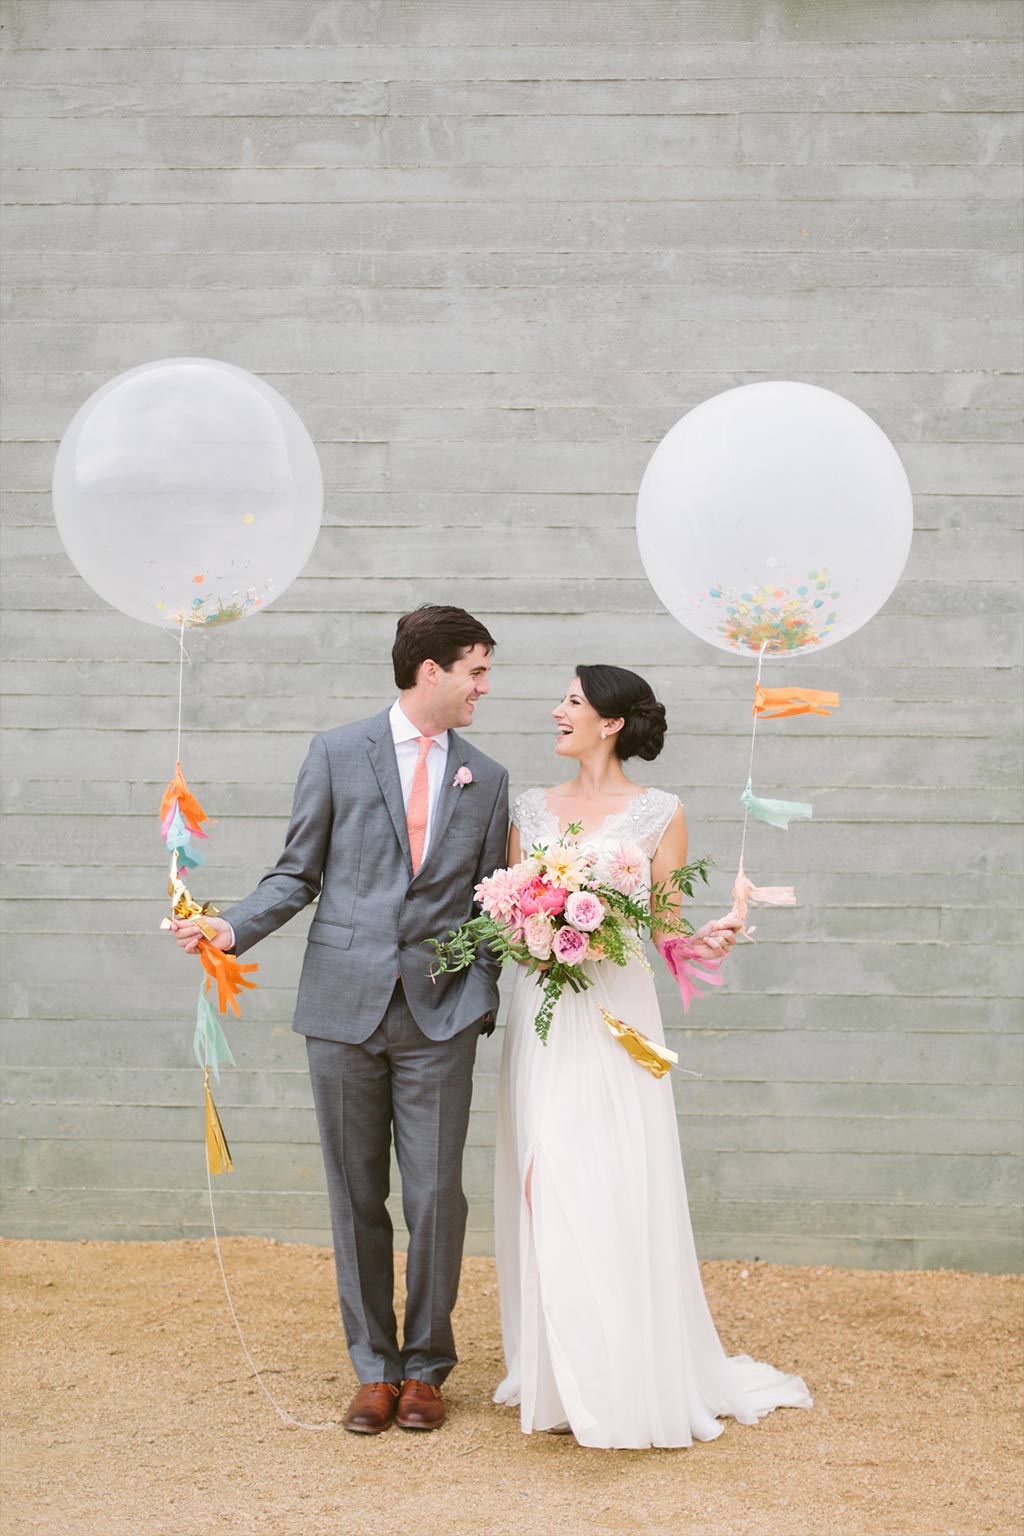 Bride and groom wedding portrait with geronimo balloons